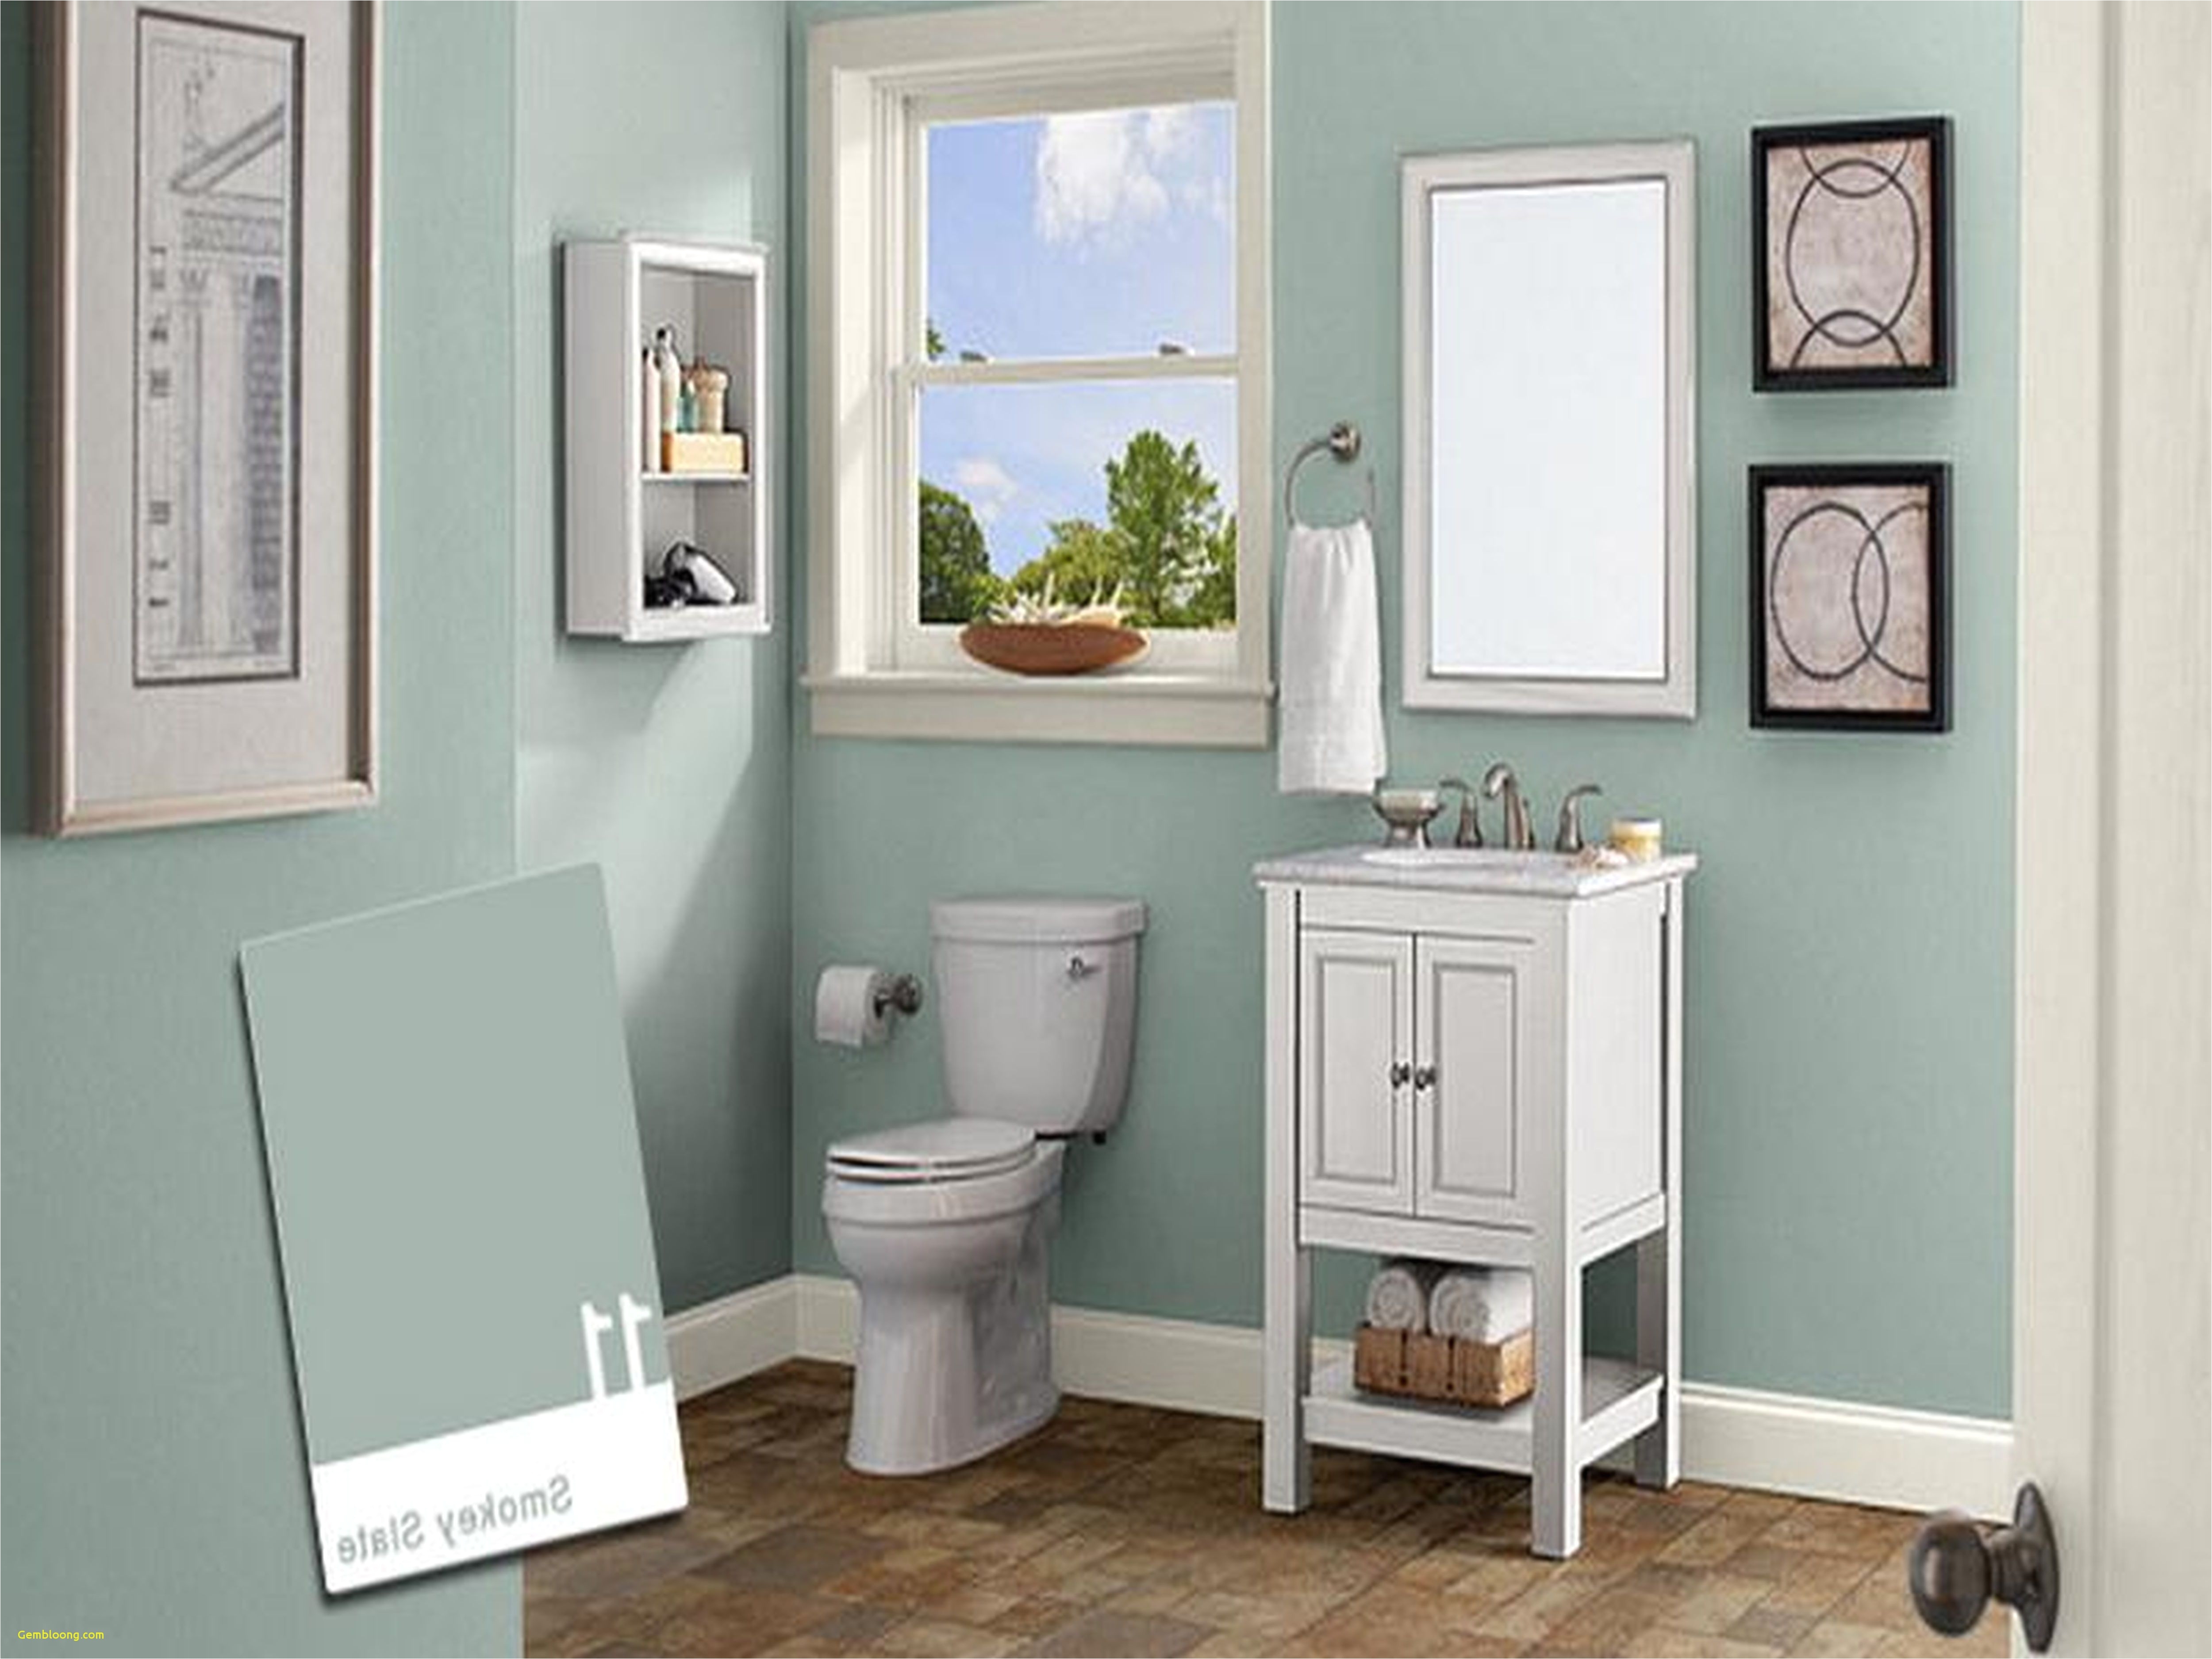 Small Bathroom Color Scheme Ideas Pretty Bathroom Colors Bathrooms that are painted a neutral color